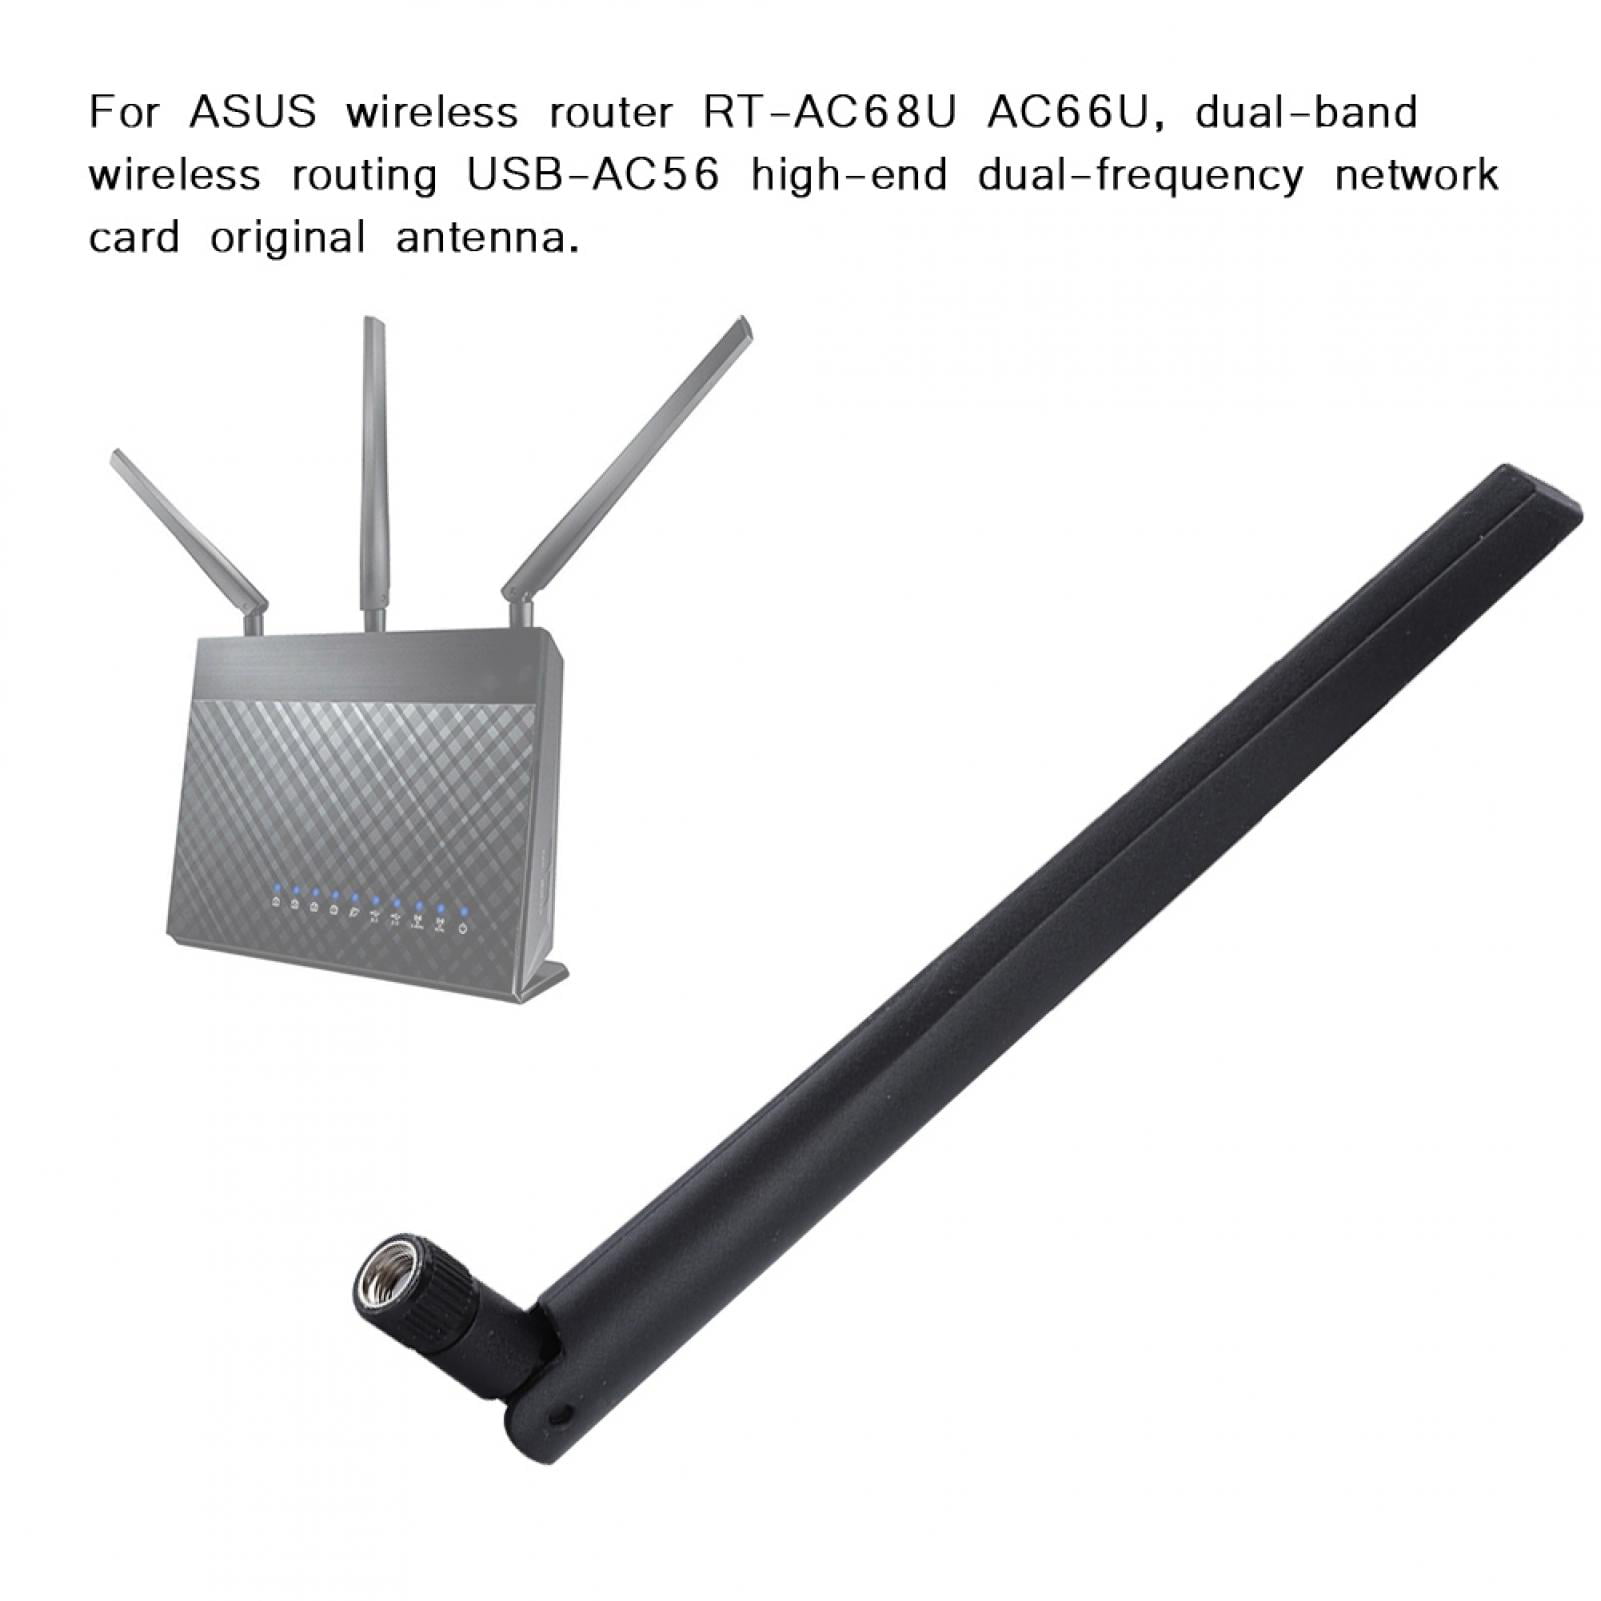 3 x 6dBi 2.4GHz 5GHz Dual Band WiFi RP-SMA Antenna for ASUS RT-AC66U RT-AC1750 